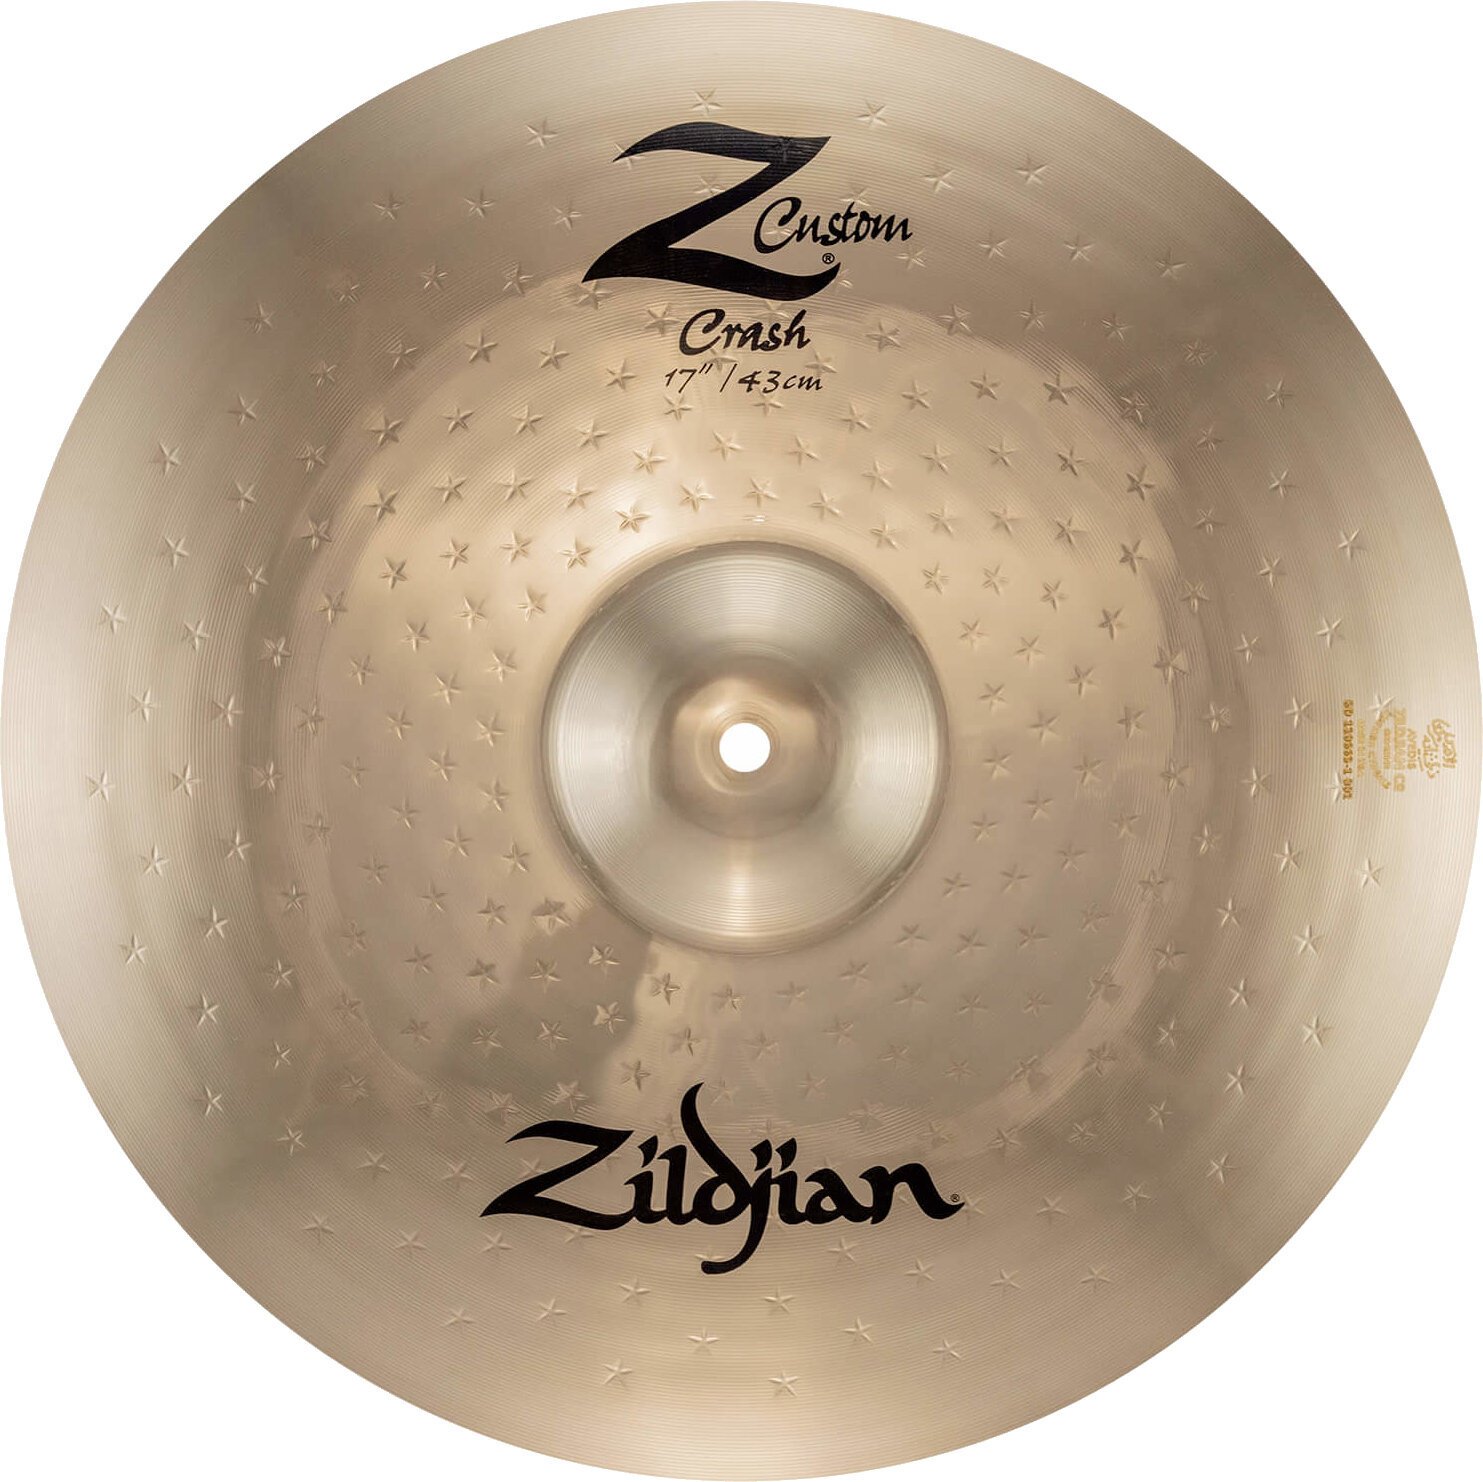 Crash Cymbal Zildjian Z Custom Crash Cymbal 17"